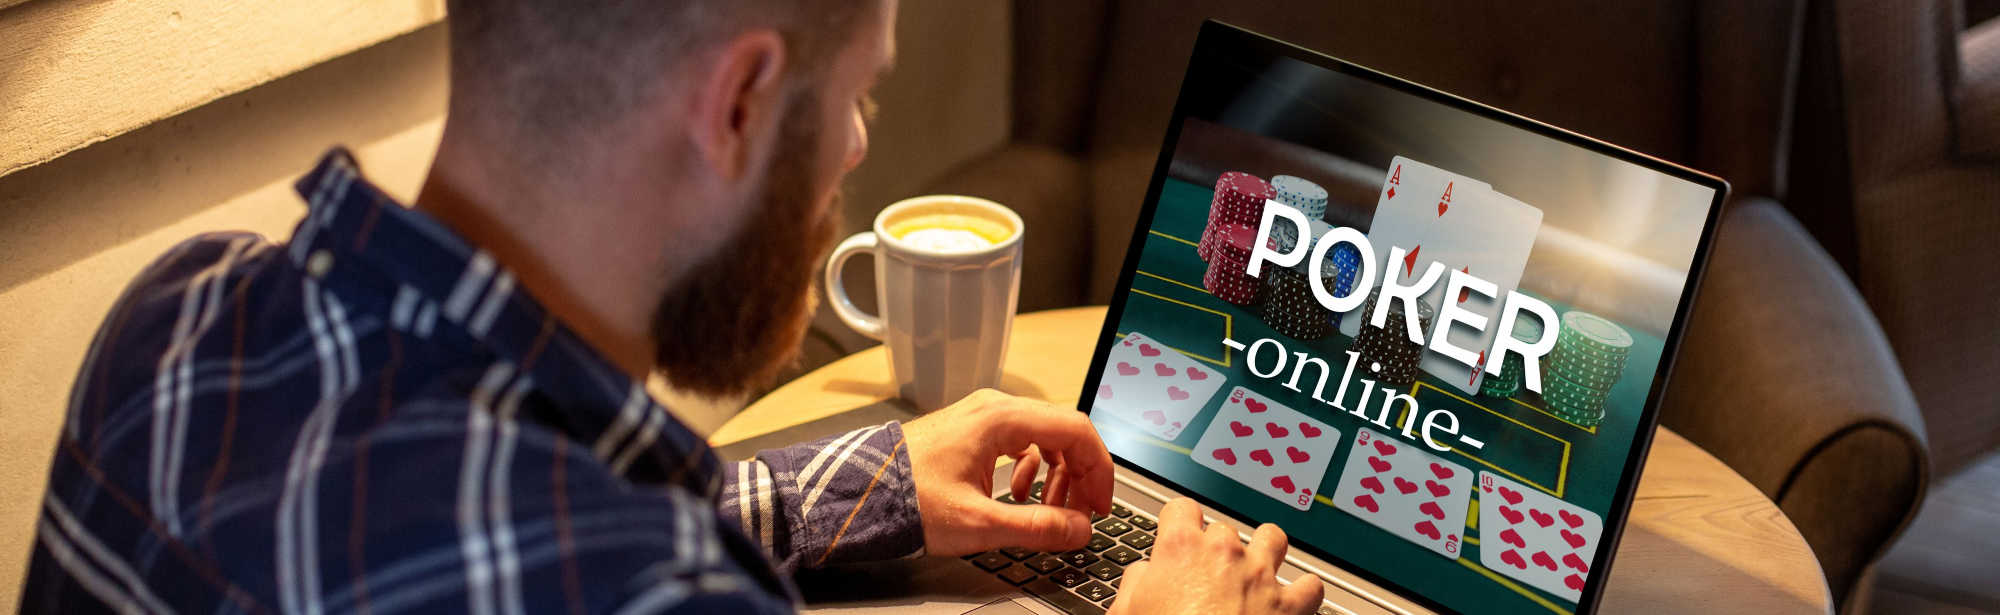 image of high risk online poker industry